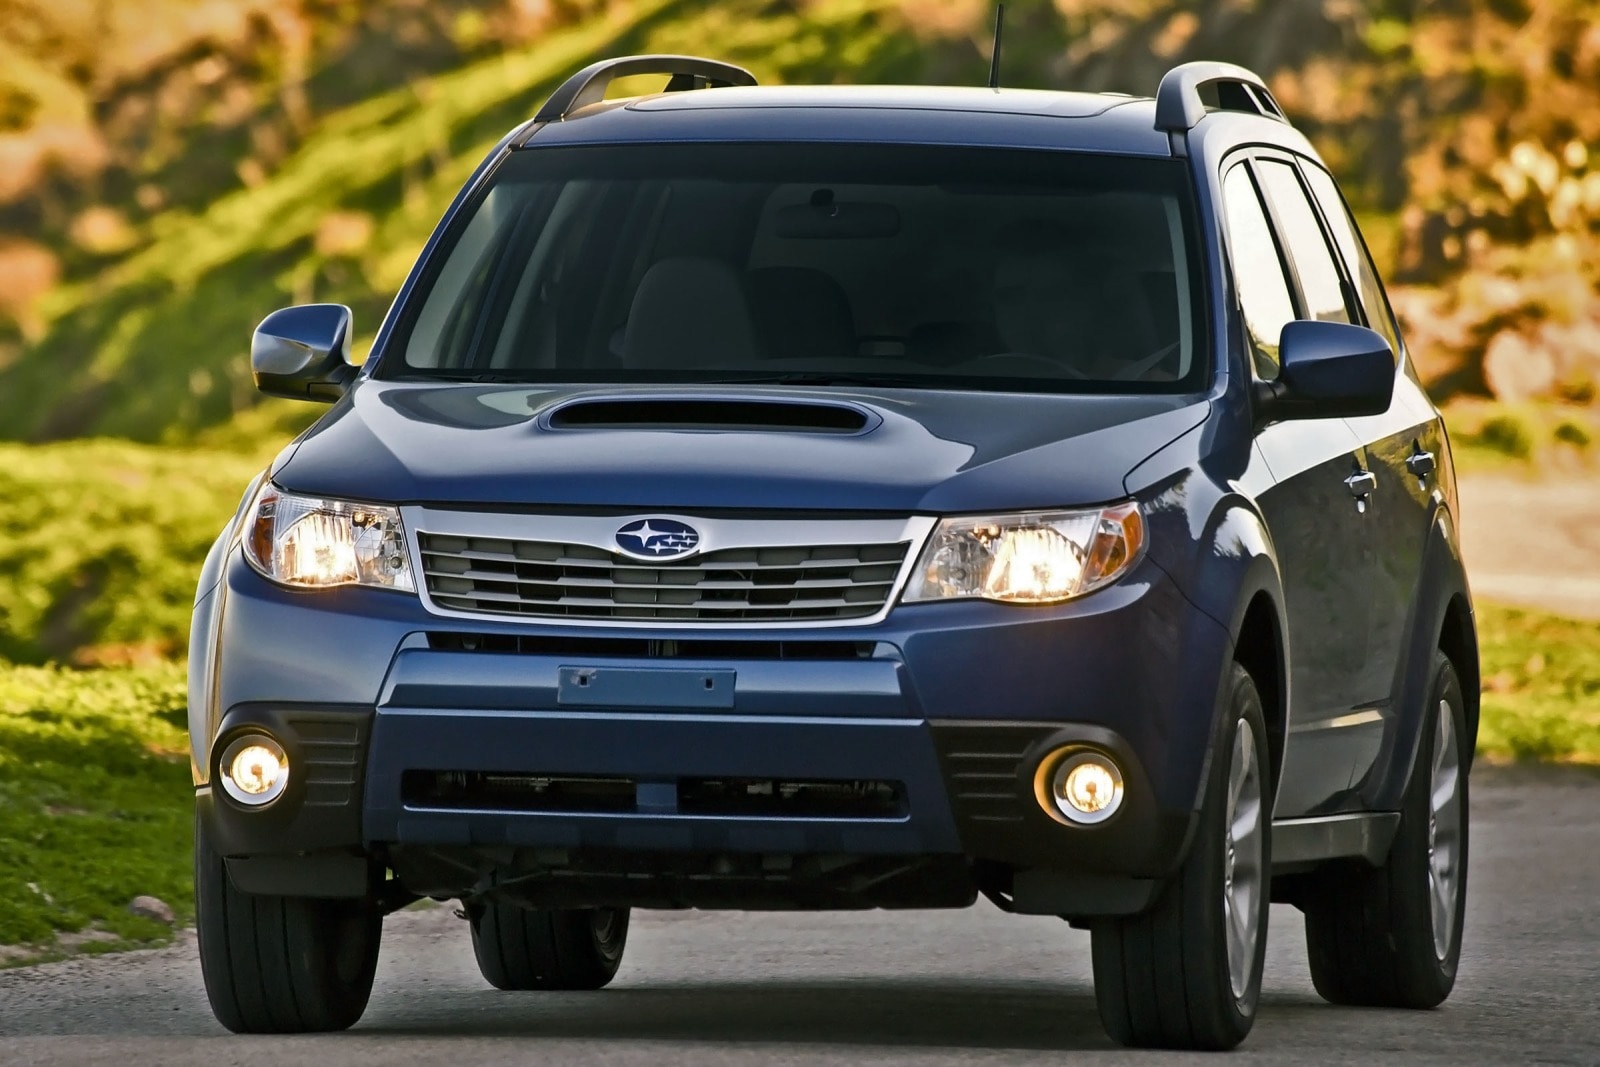 2013 Subaru Forester Review & Ratings | Edmunds